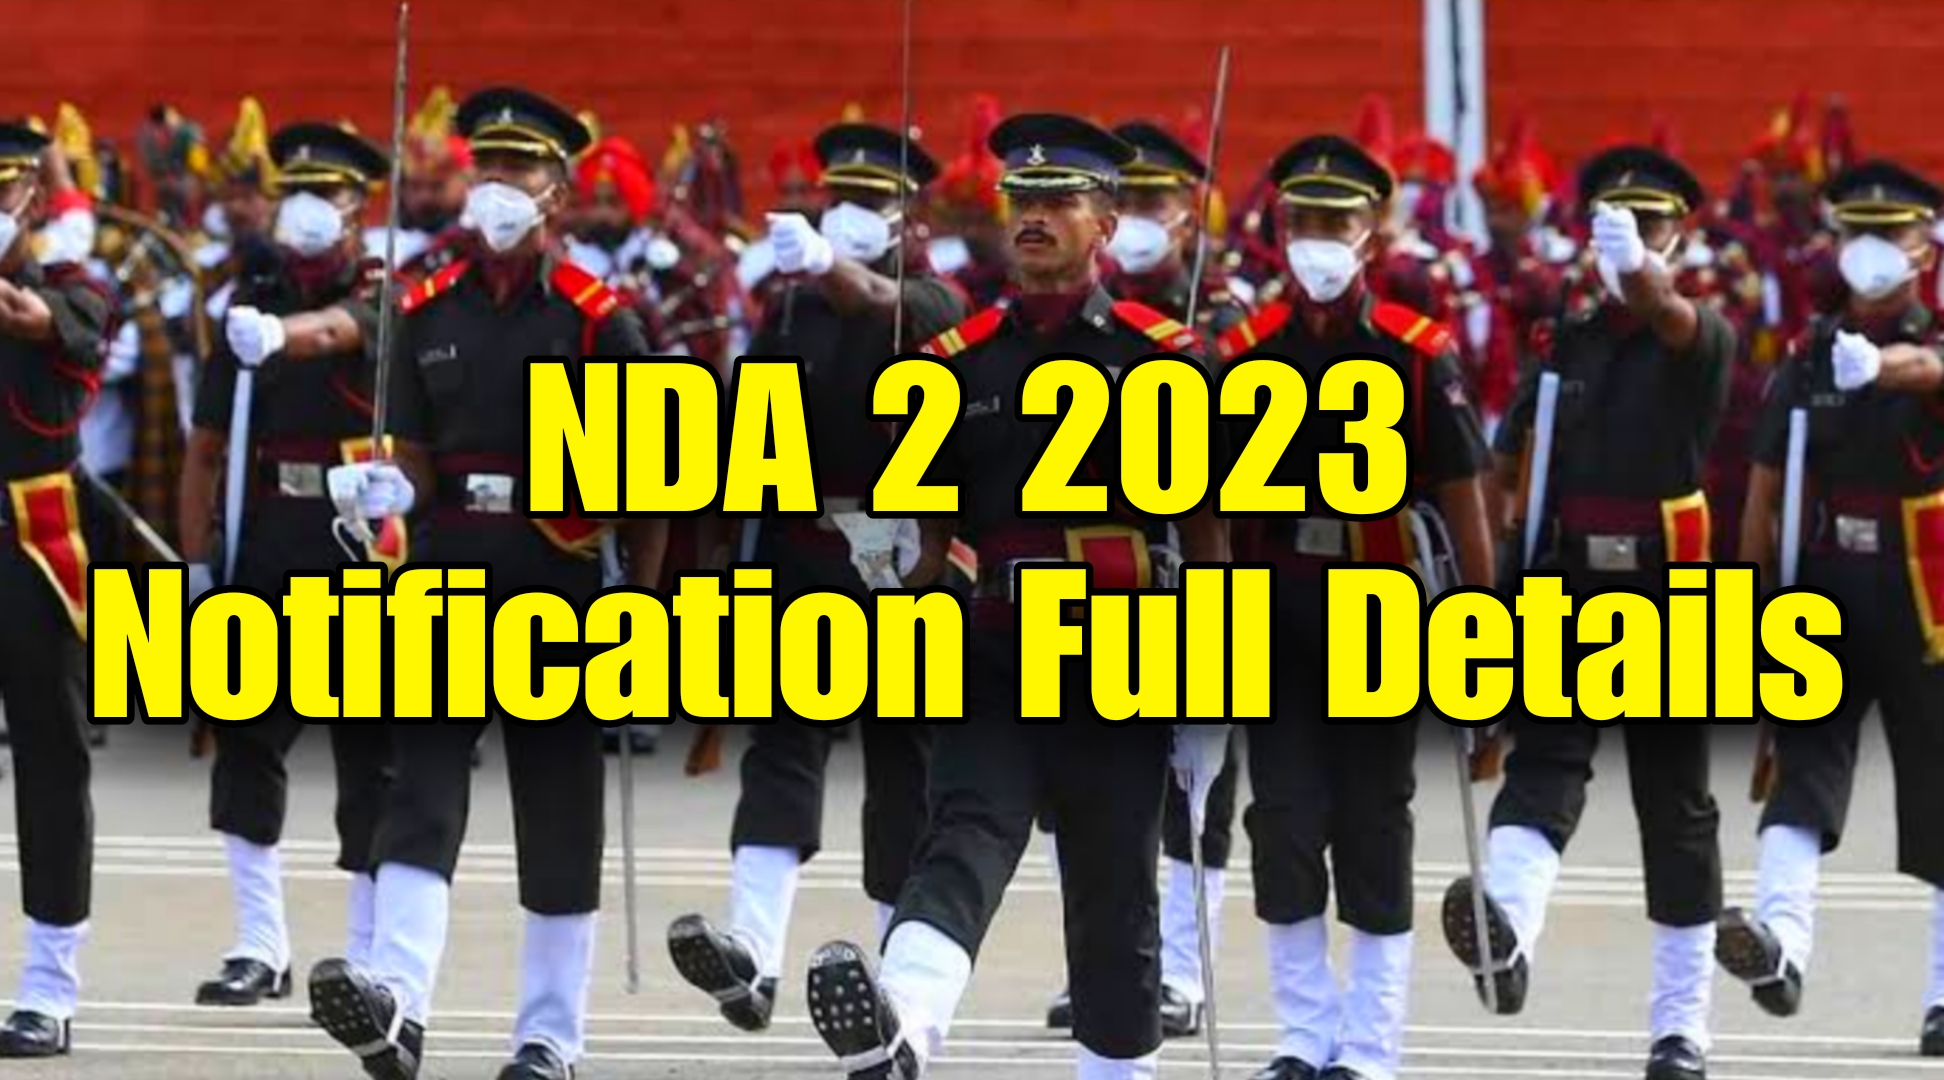 UPSC NDA II 2023 Notification Full Details